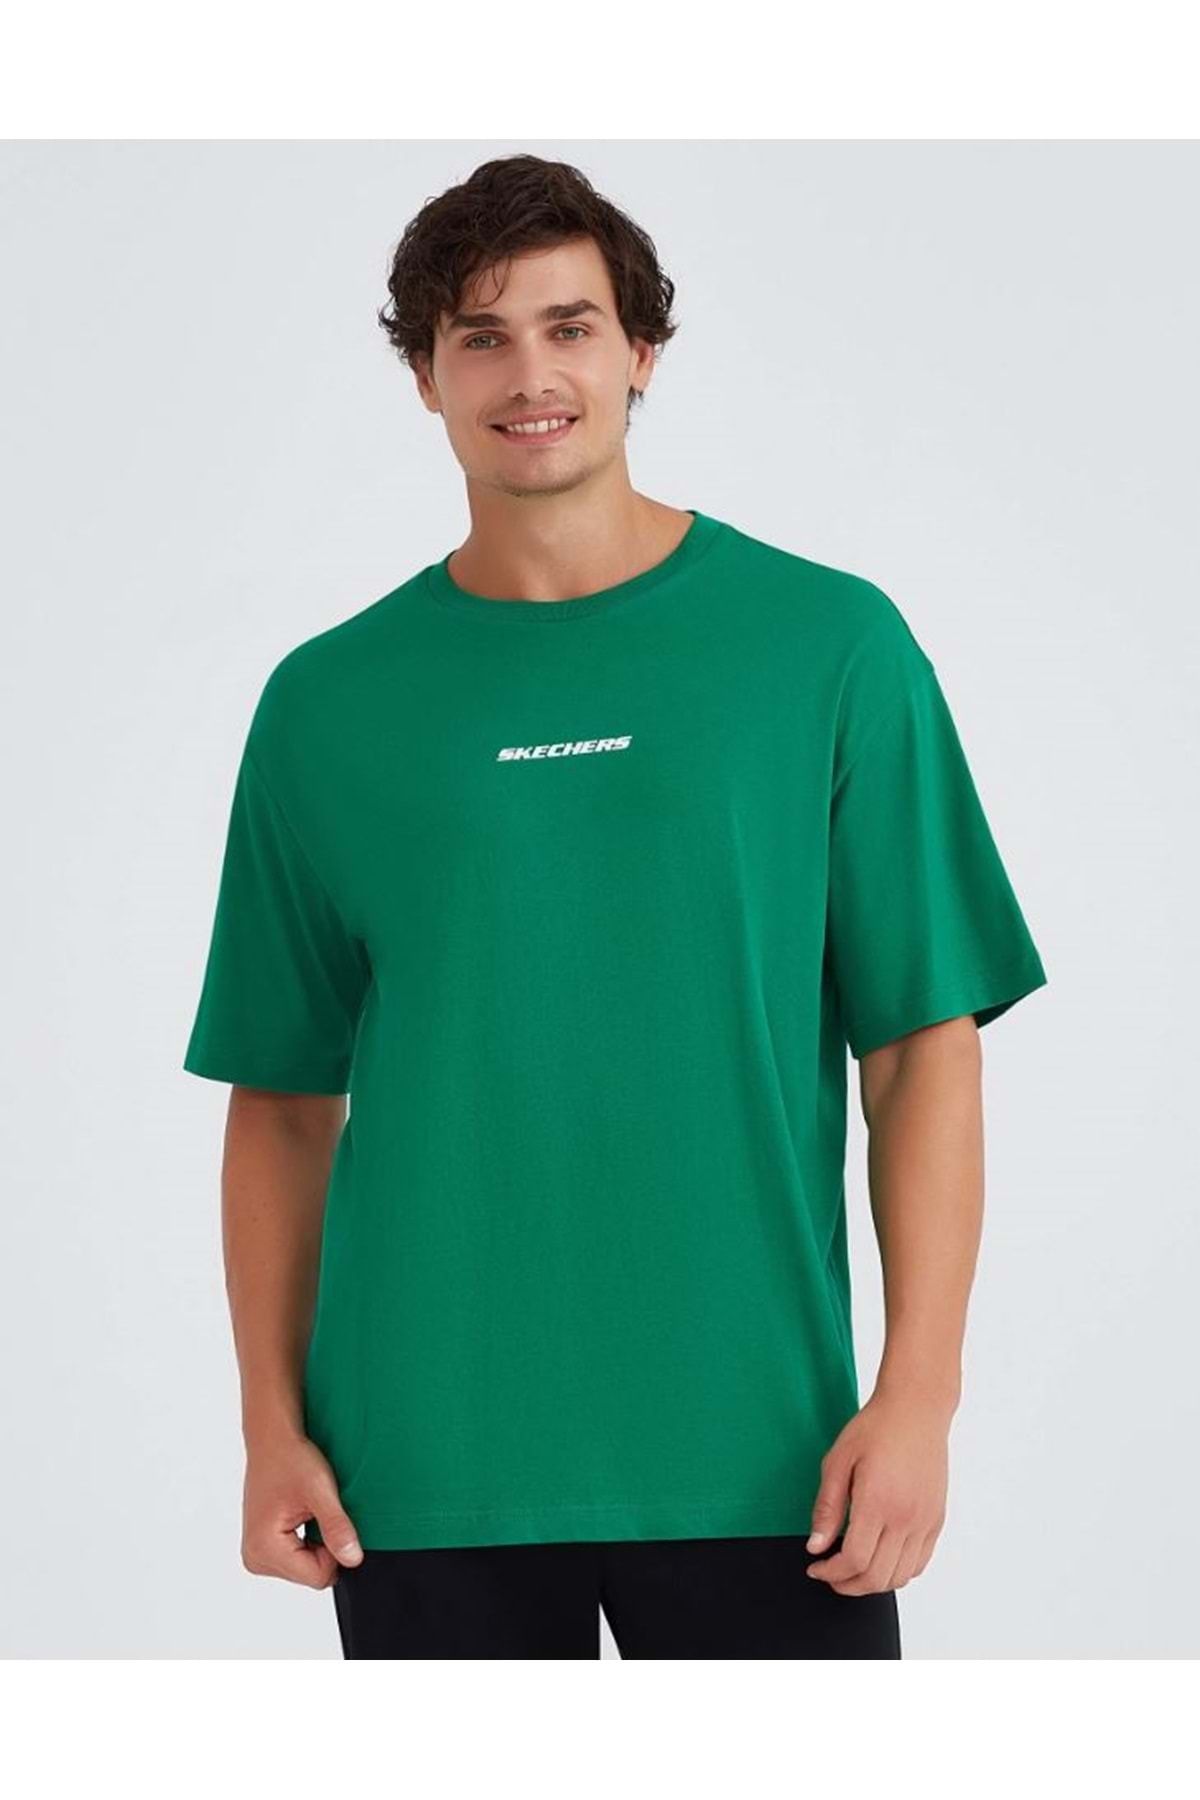 Skechers M Graphic Tee Oversize T-shirt S232404- Erkek Tişört Yeşil